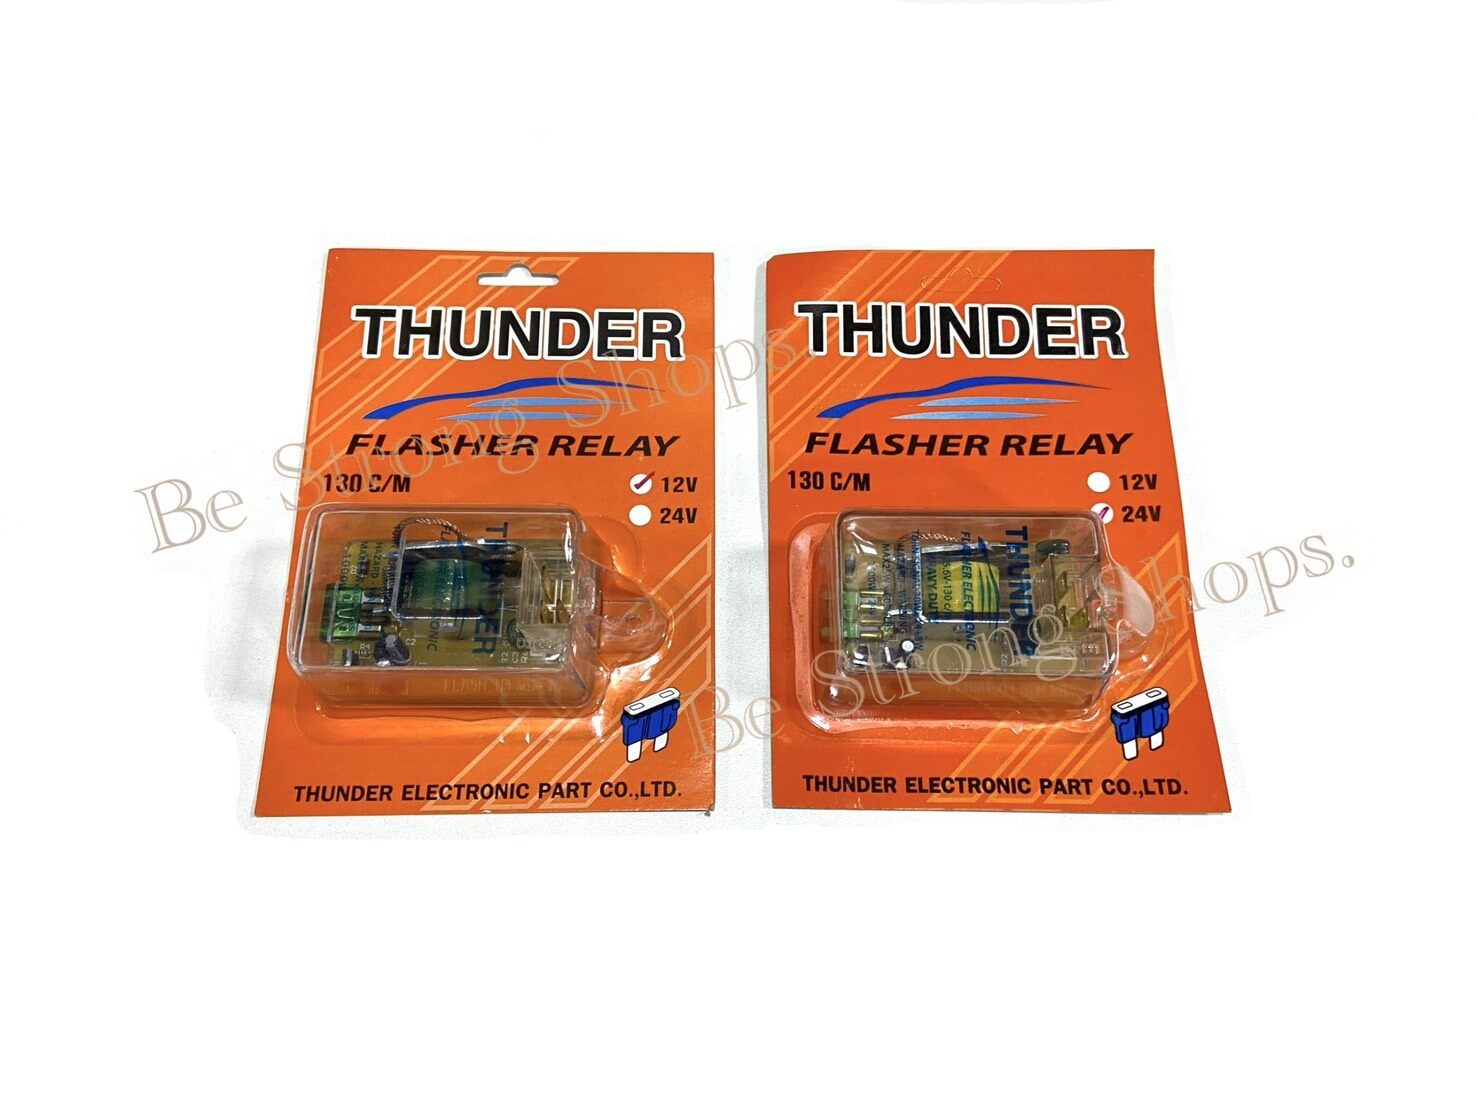 THUNDER แฟลชเชอร์ ไฟเลี้ยว Flasher Relay 24V. / 1500 W. 130 C/M ฝาใส (จำนวน 1 อัน)